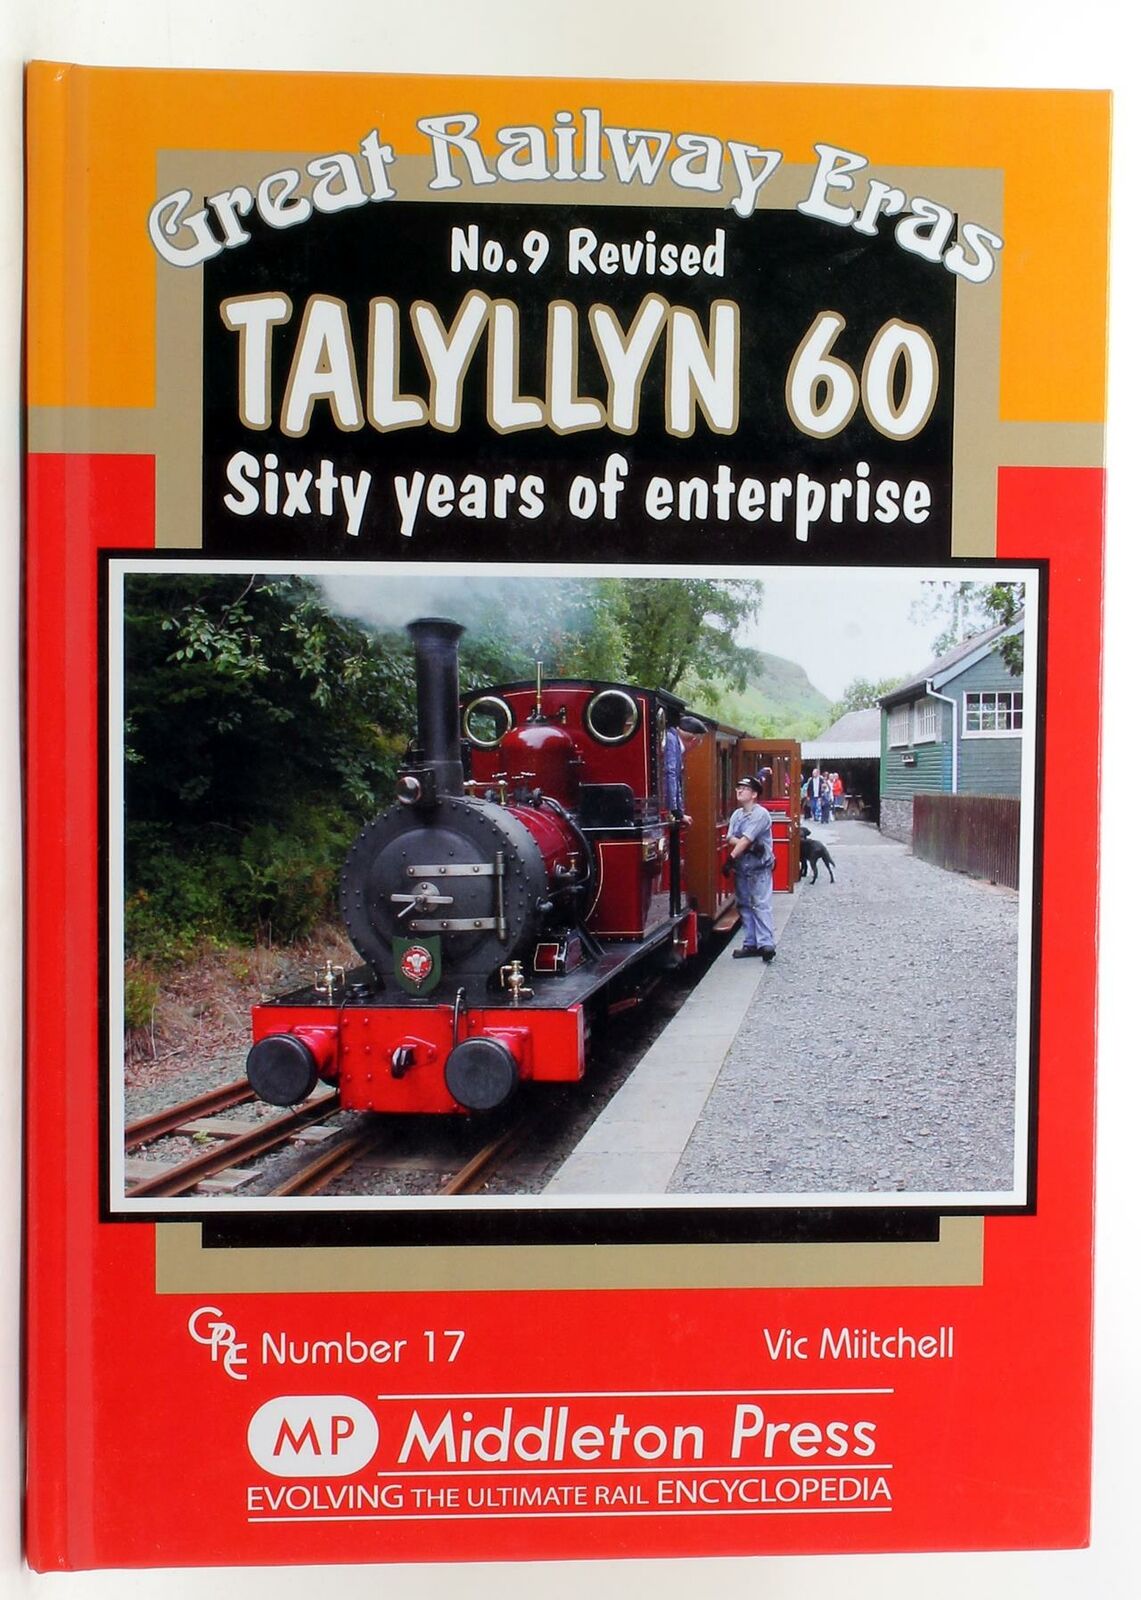 Great Railway Eras Talyllyn 60 Sixty Years of enterprise